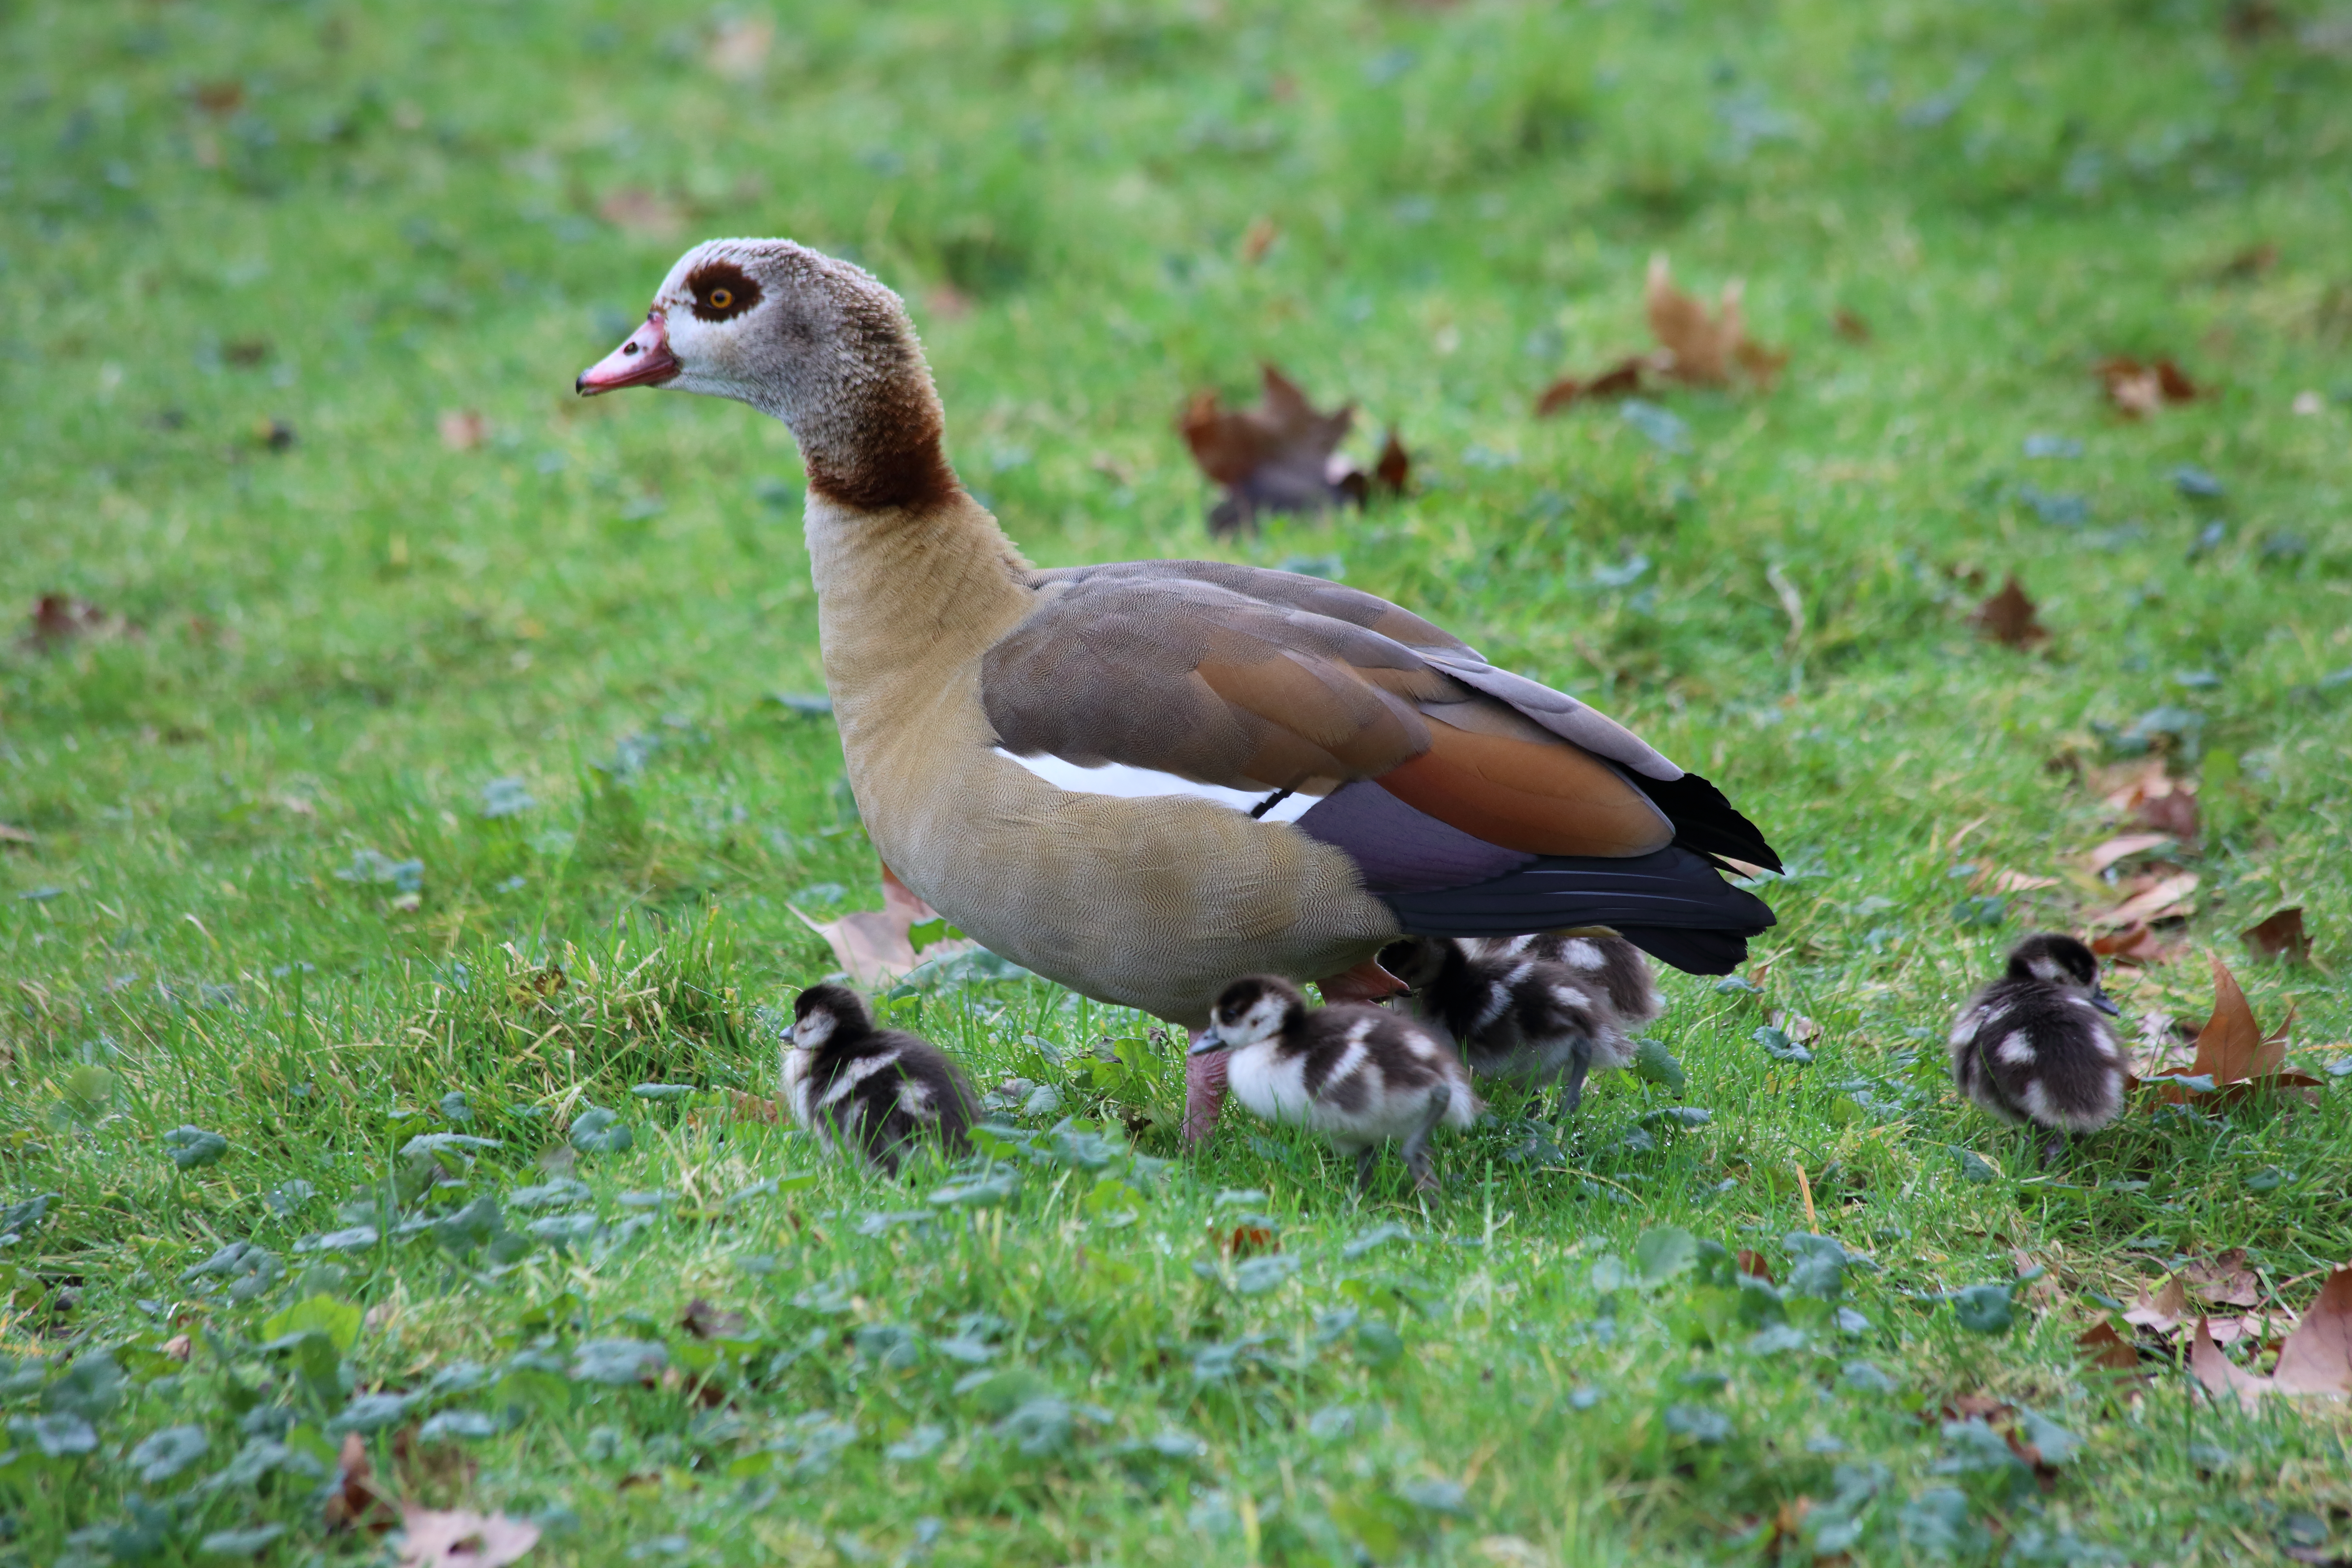 Egyptian Goose and Goslings .Painshill Park in Cobham. Copyright Chris Bushe 2016